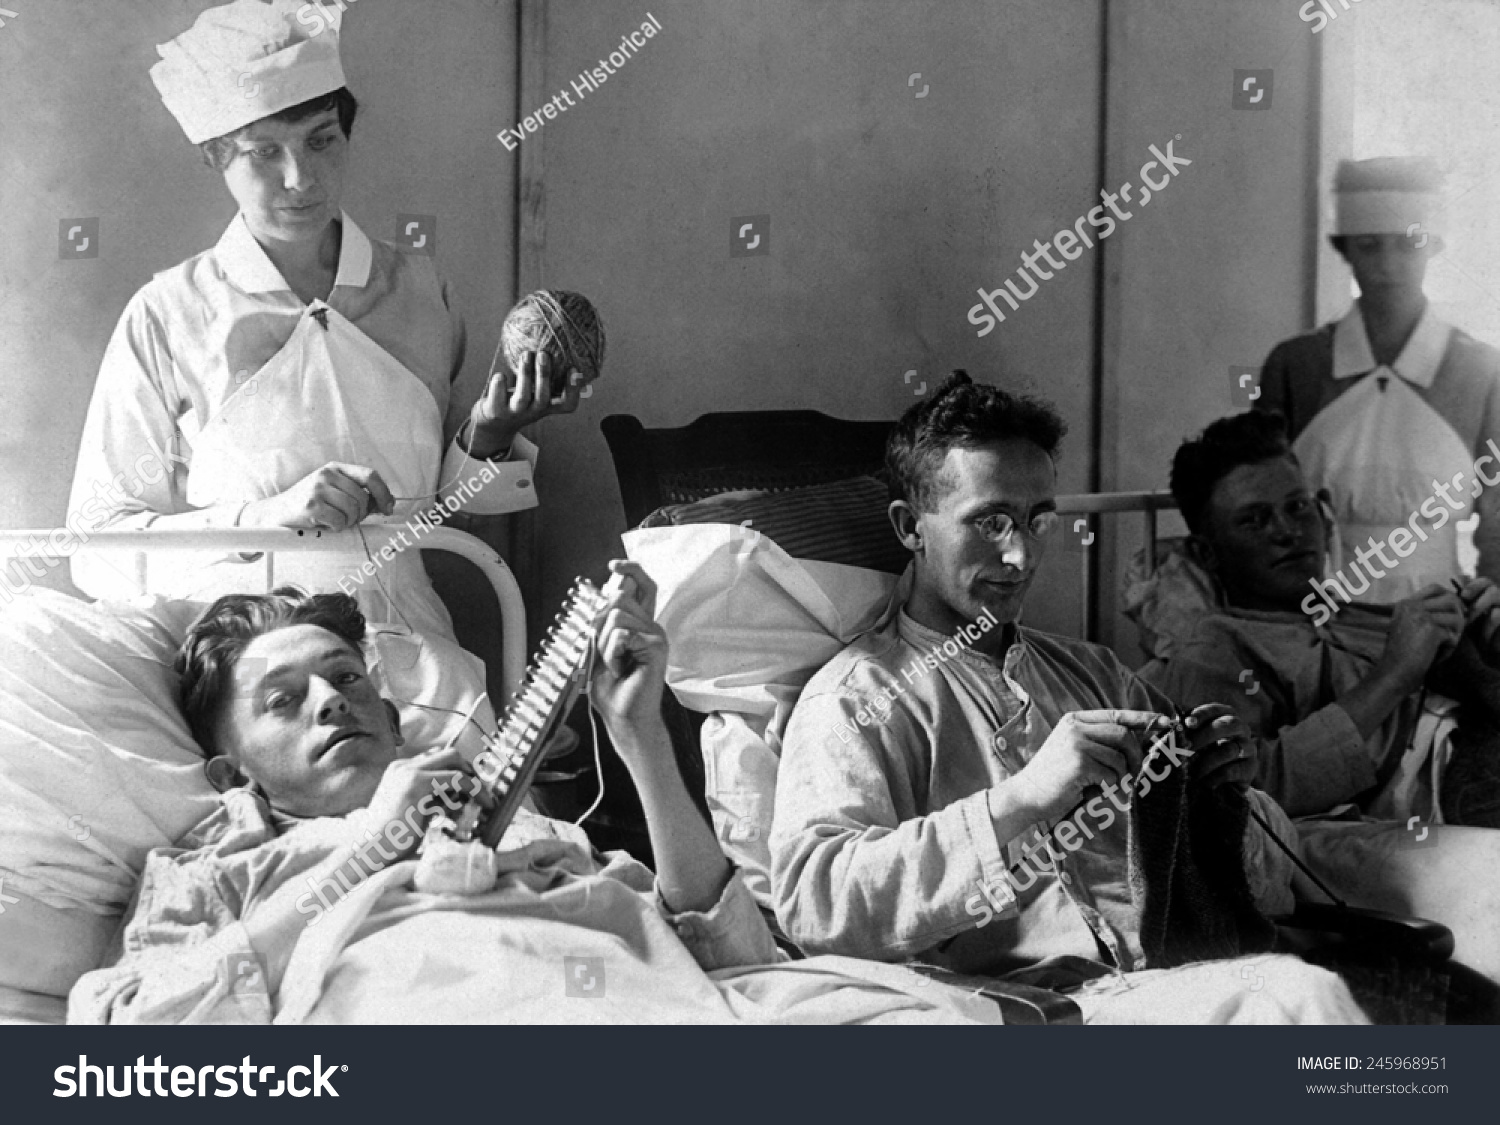 145 World war one nurses Images, Stock Photos & Vectors | Shutterstock